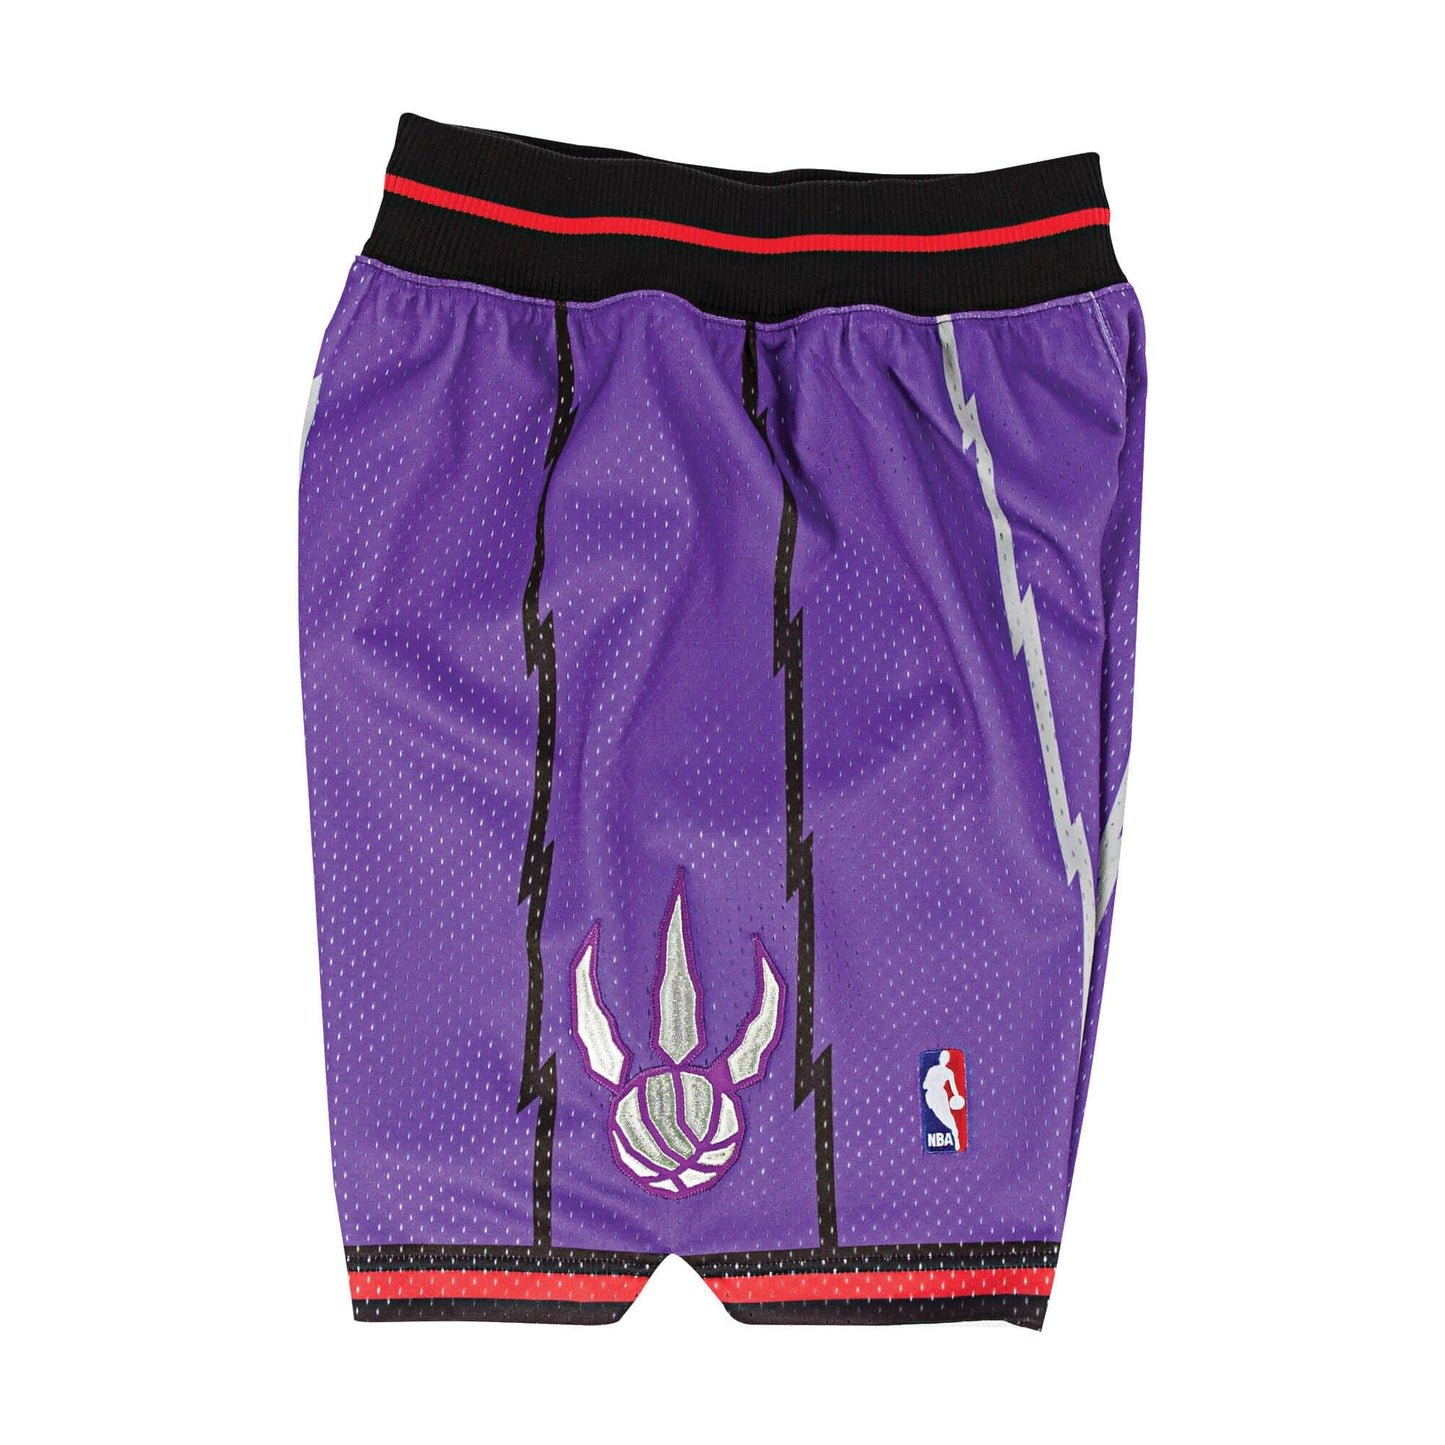 NBA Authentic Shorts Toronto Raptors Road 1998-99